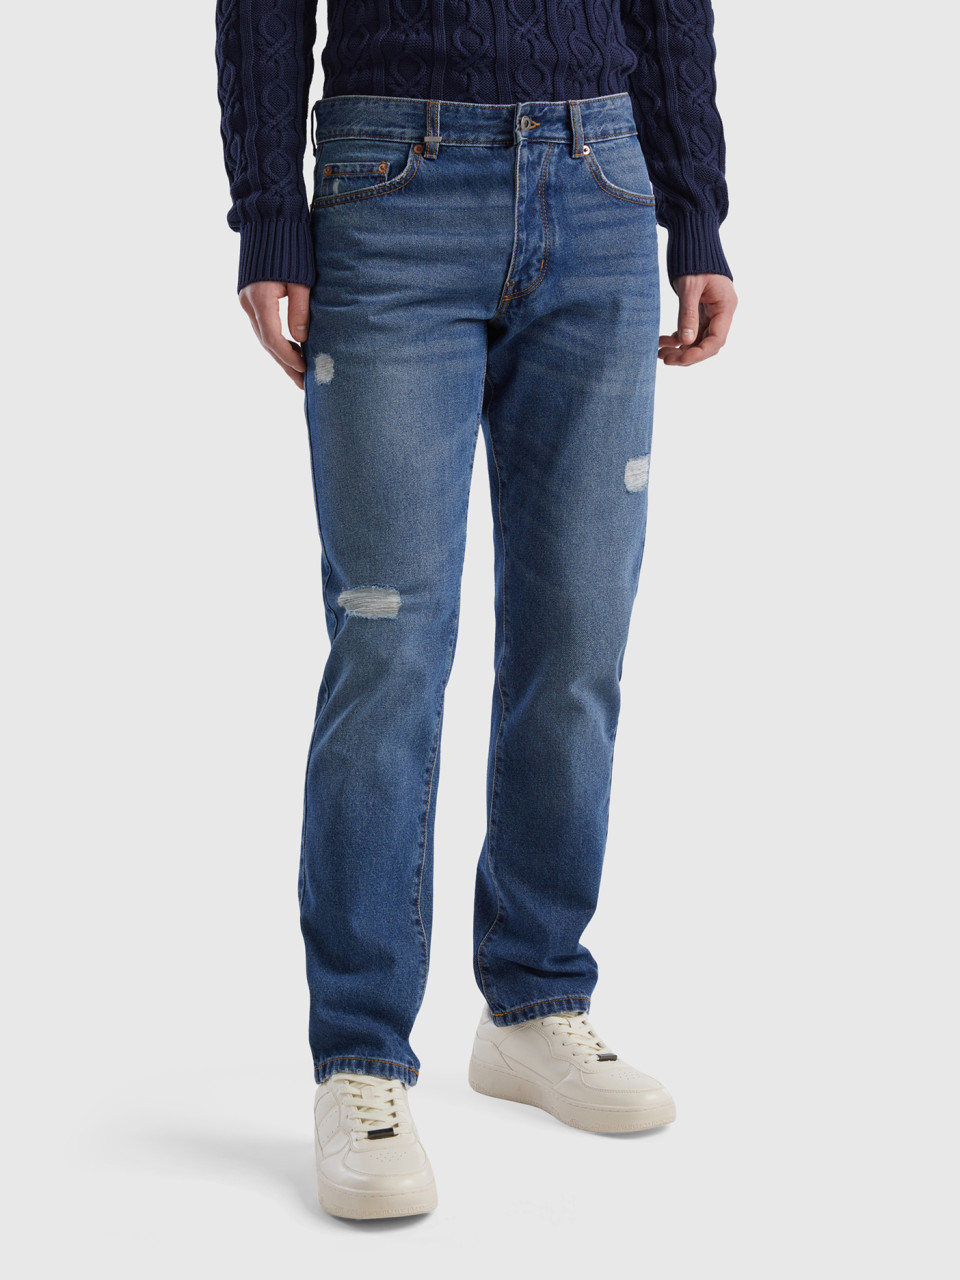 Benetton, Jeans Straight-fit, Azurblau, male